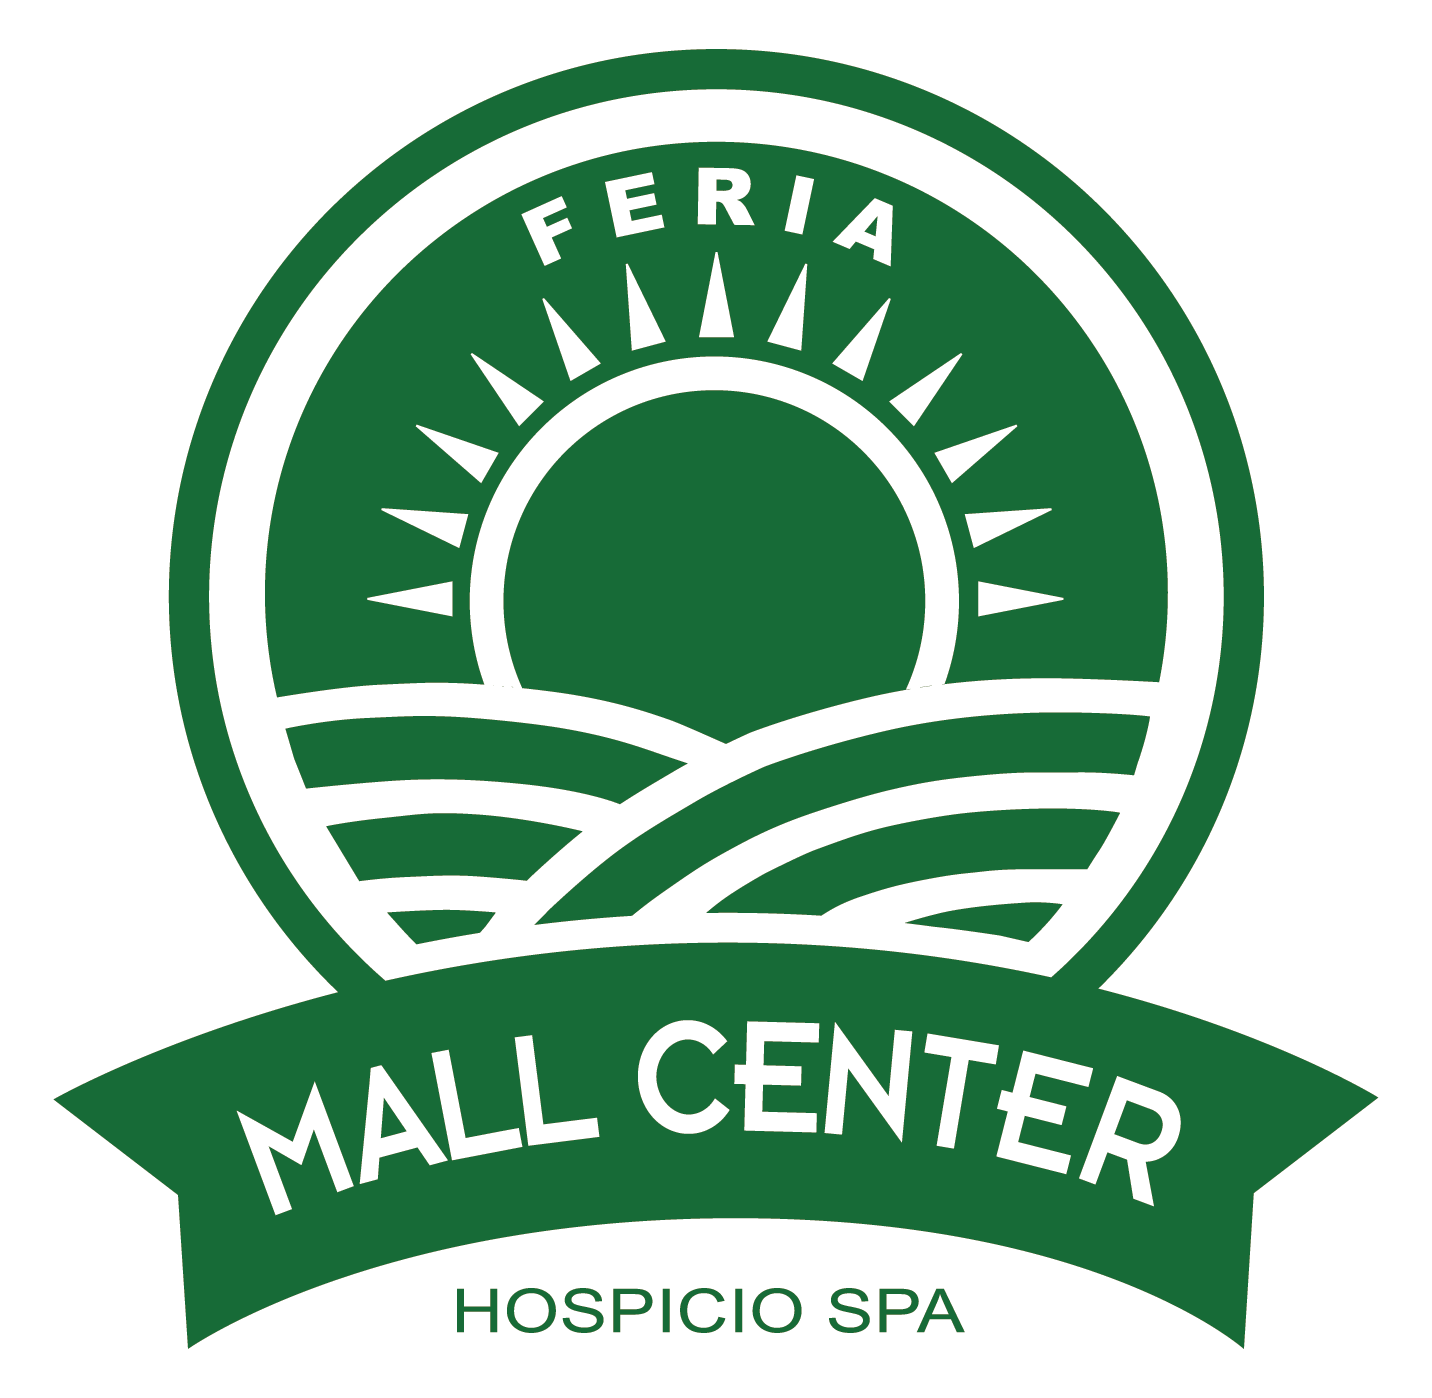 Mall Center Hospicio